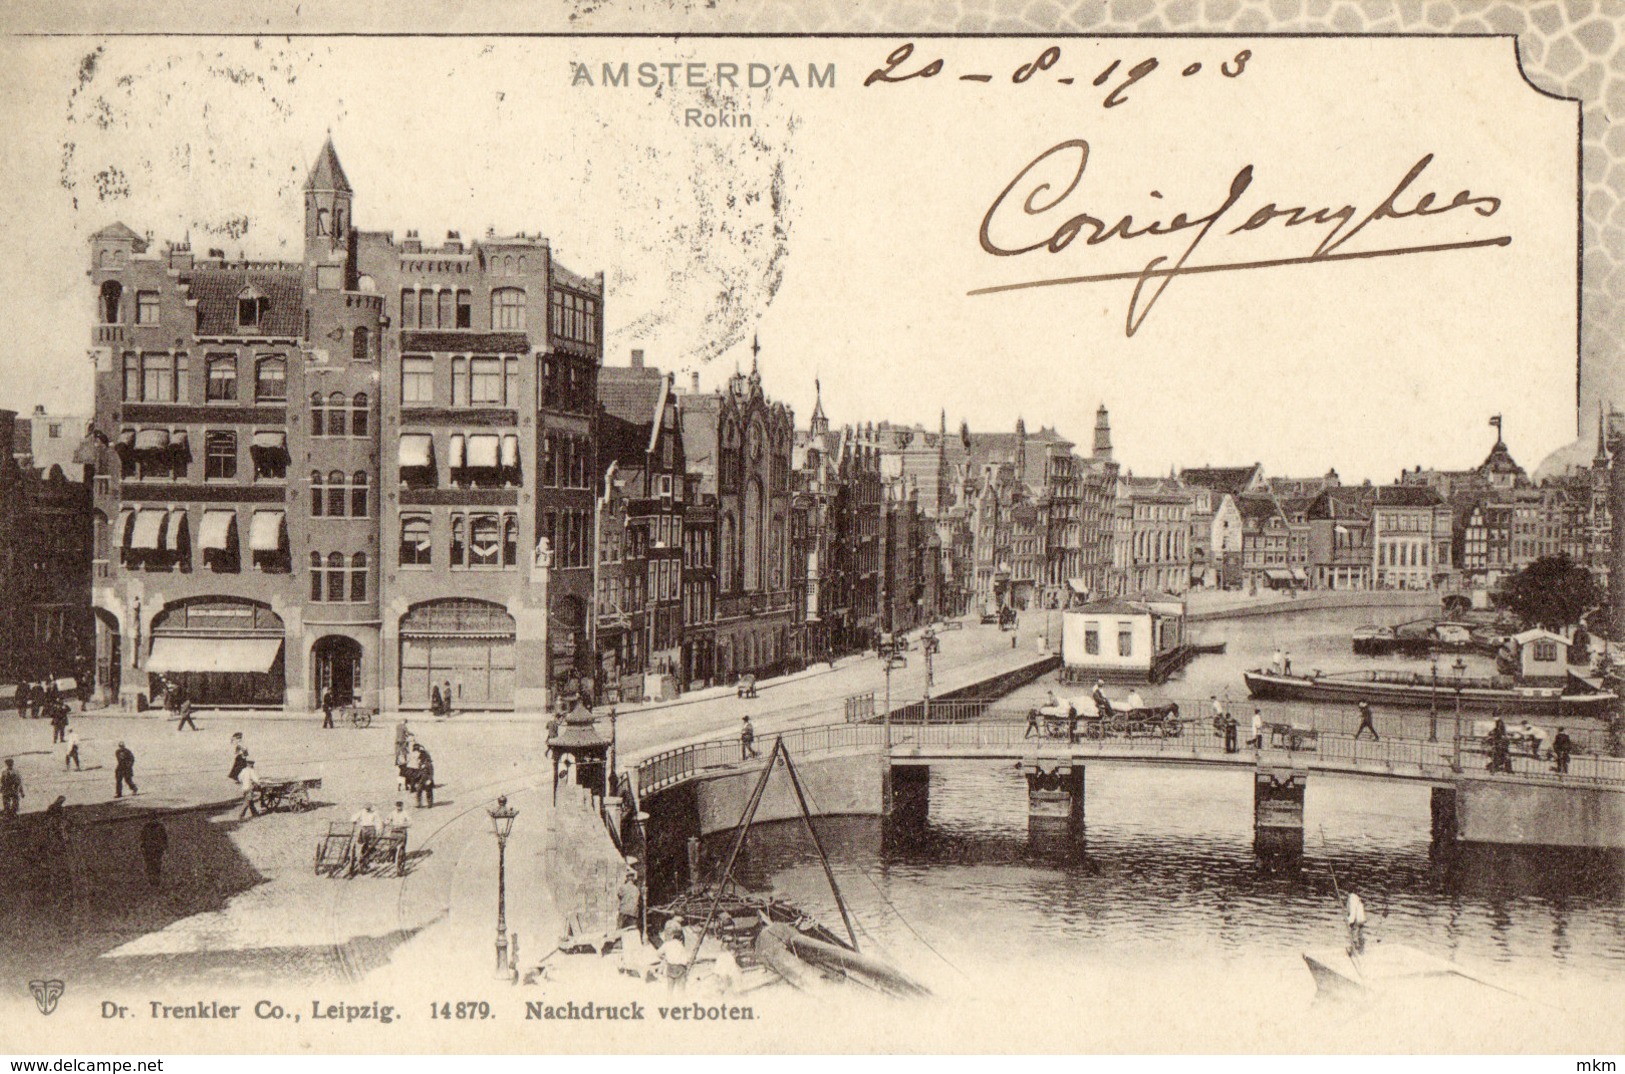 Rokin 1903 - Amsterdam